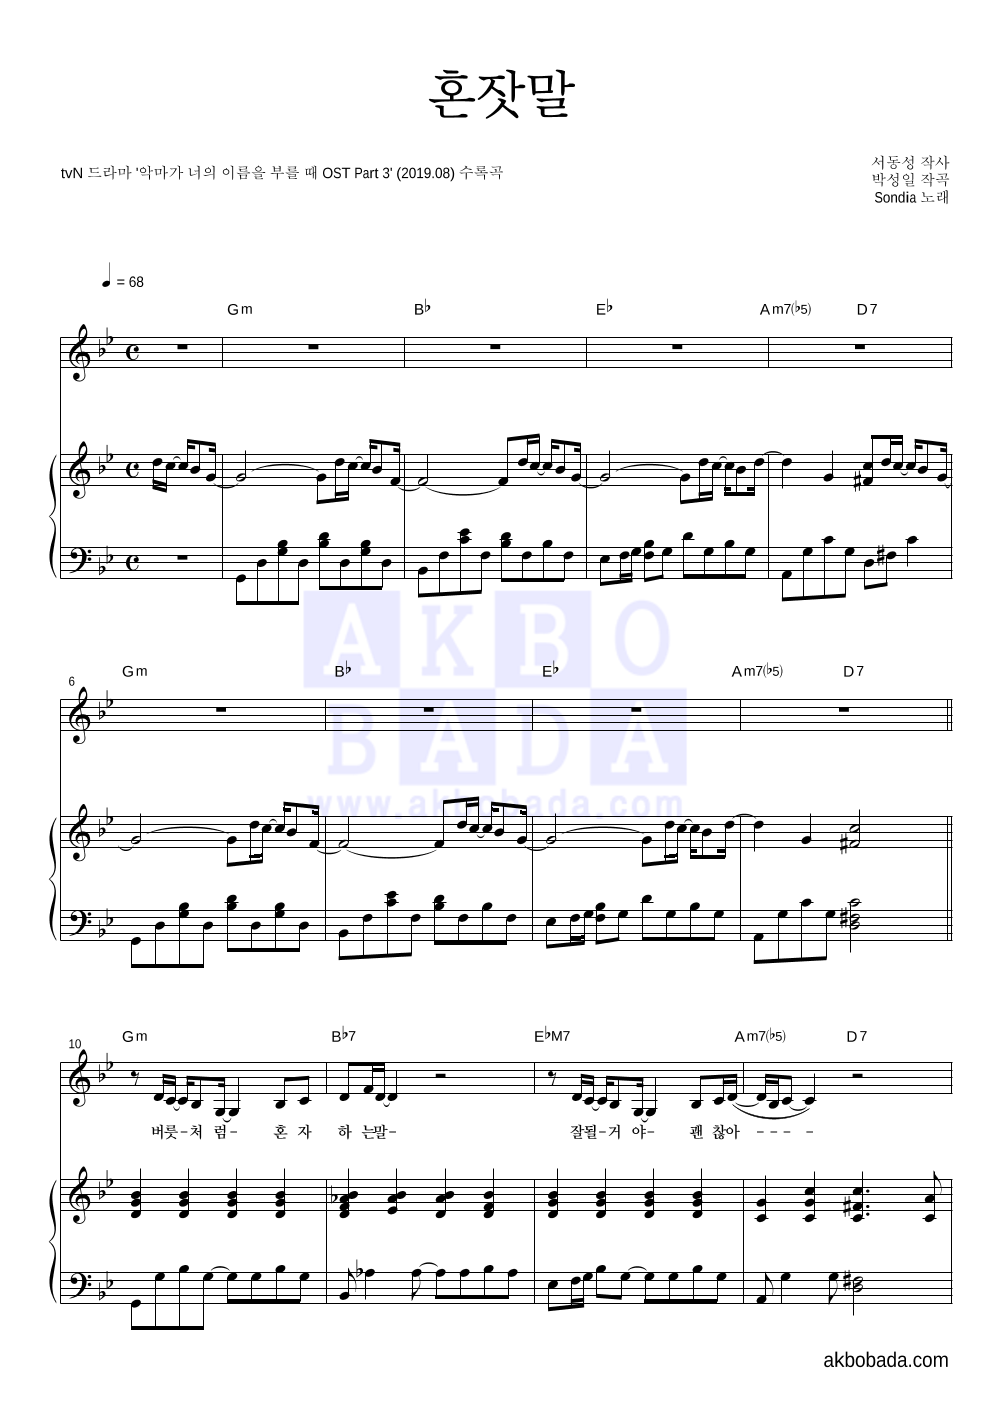 Sondia - 혼잣말 피아노 3단 악보 